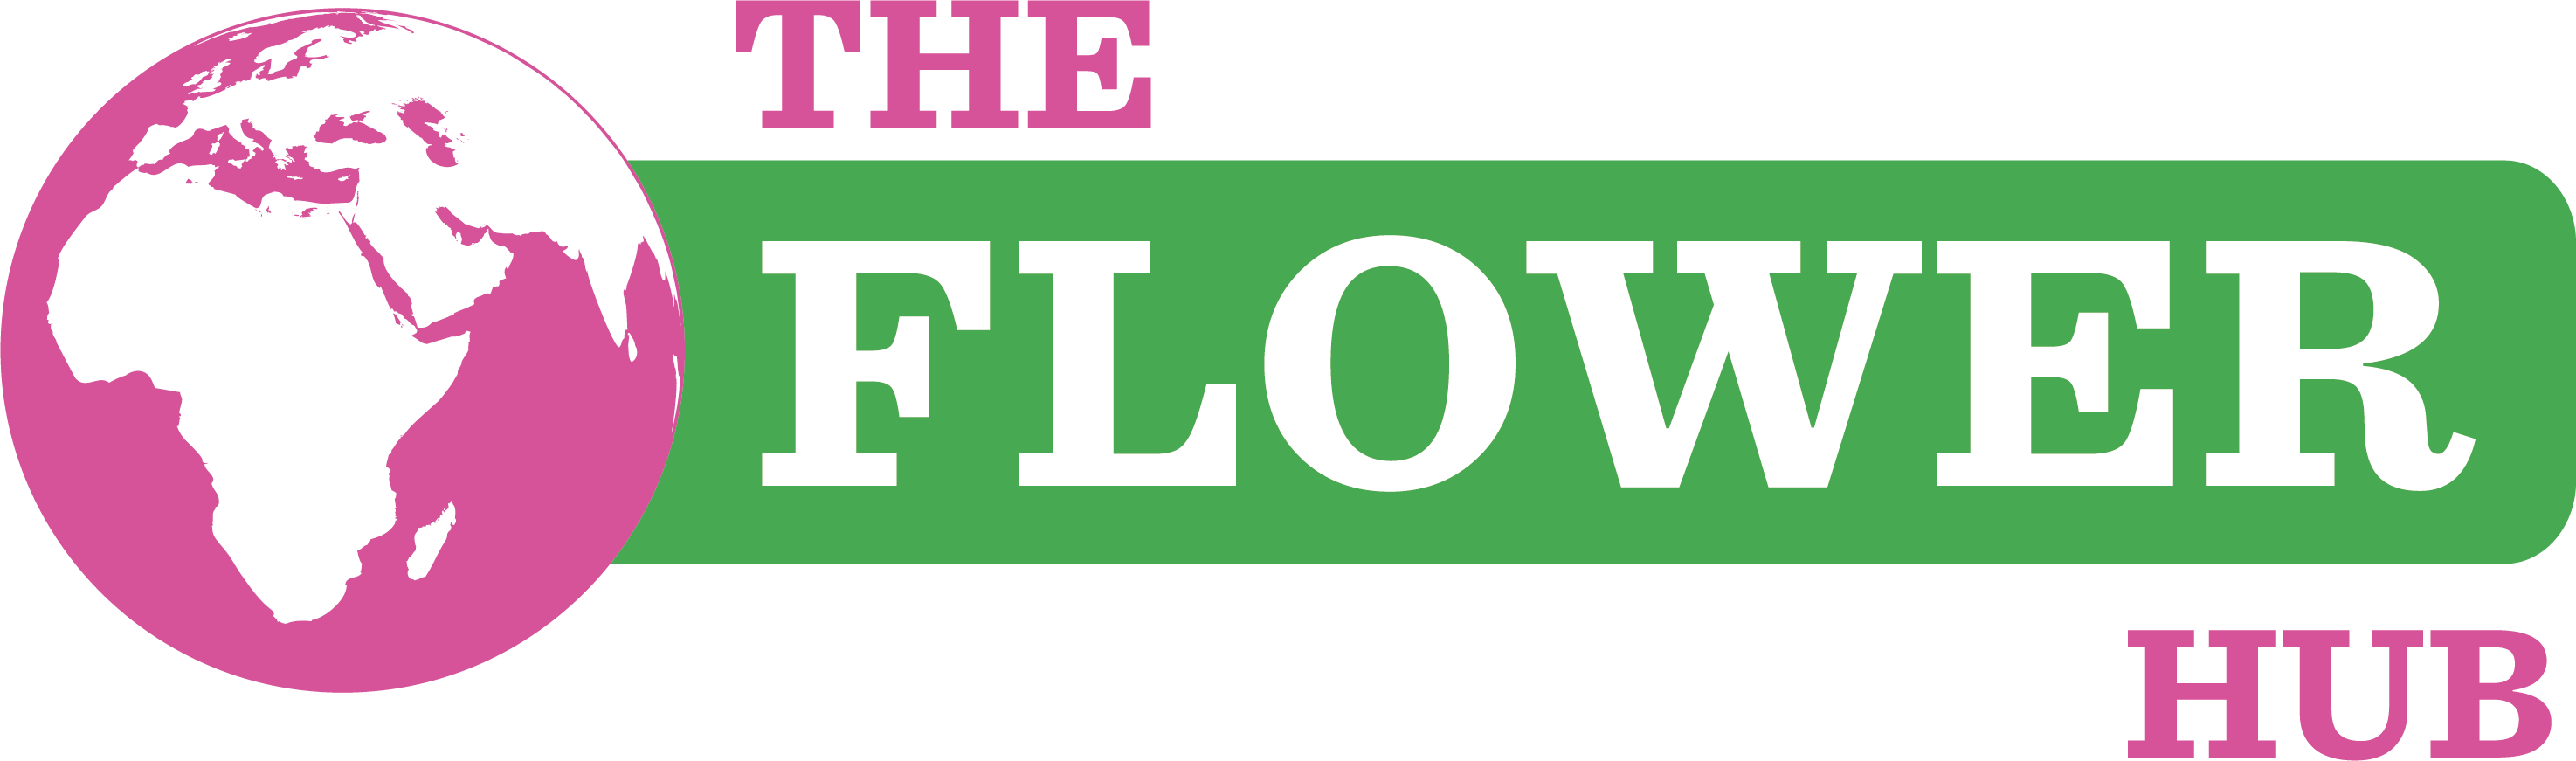 The Flower Hub